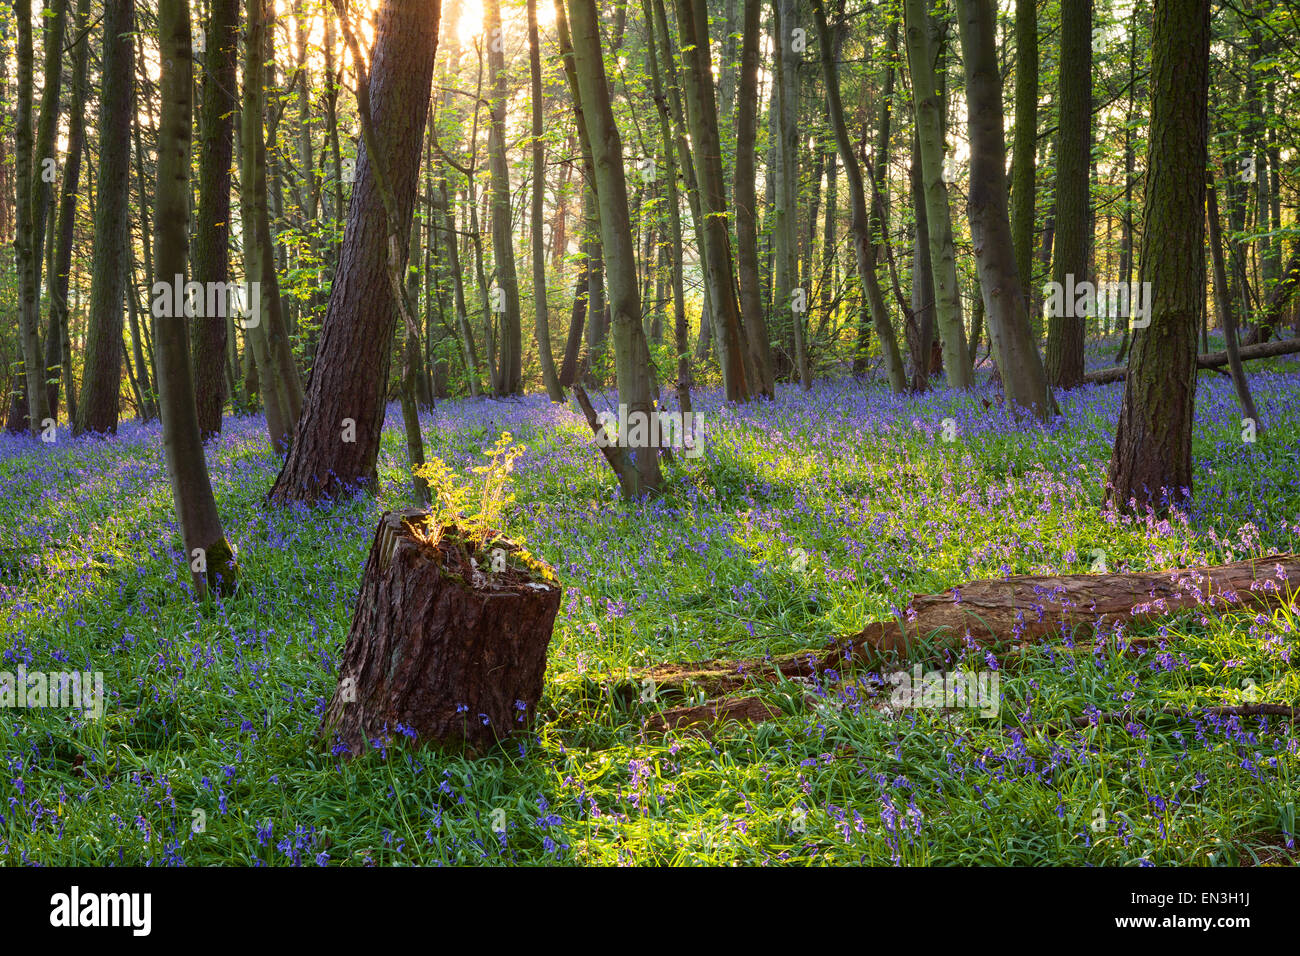 Brumby Holz, Scunthorpe, North Lincolnshire, UK. Frühling, April 2015. Stockfoto